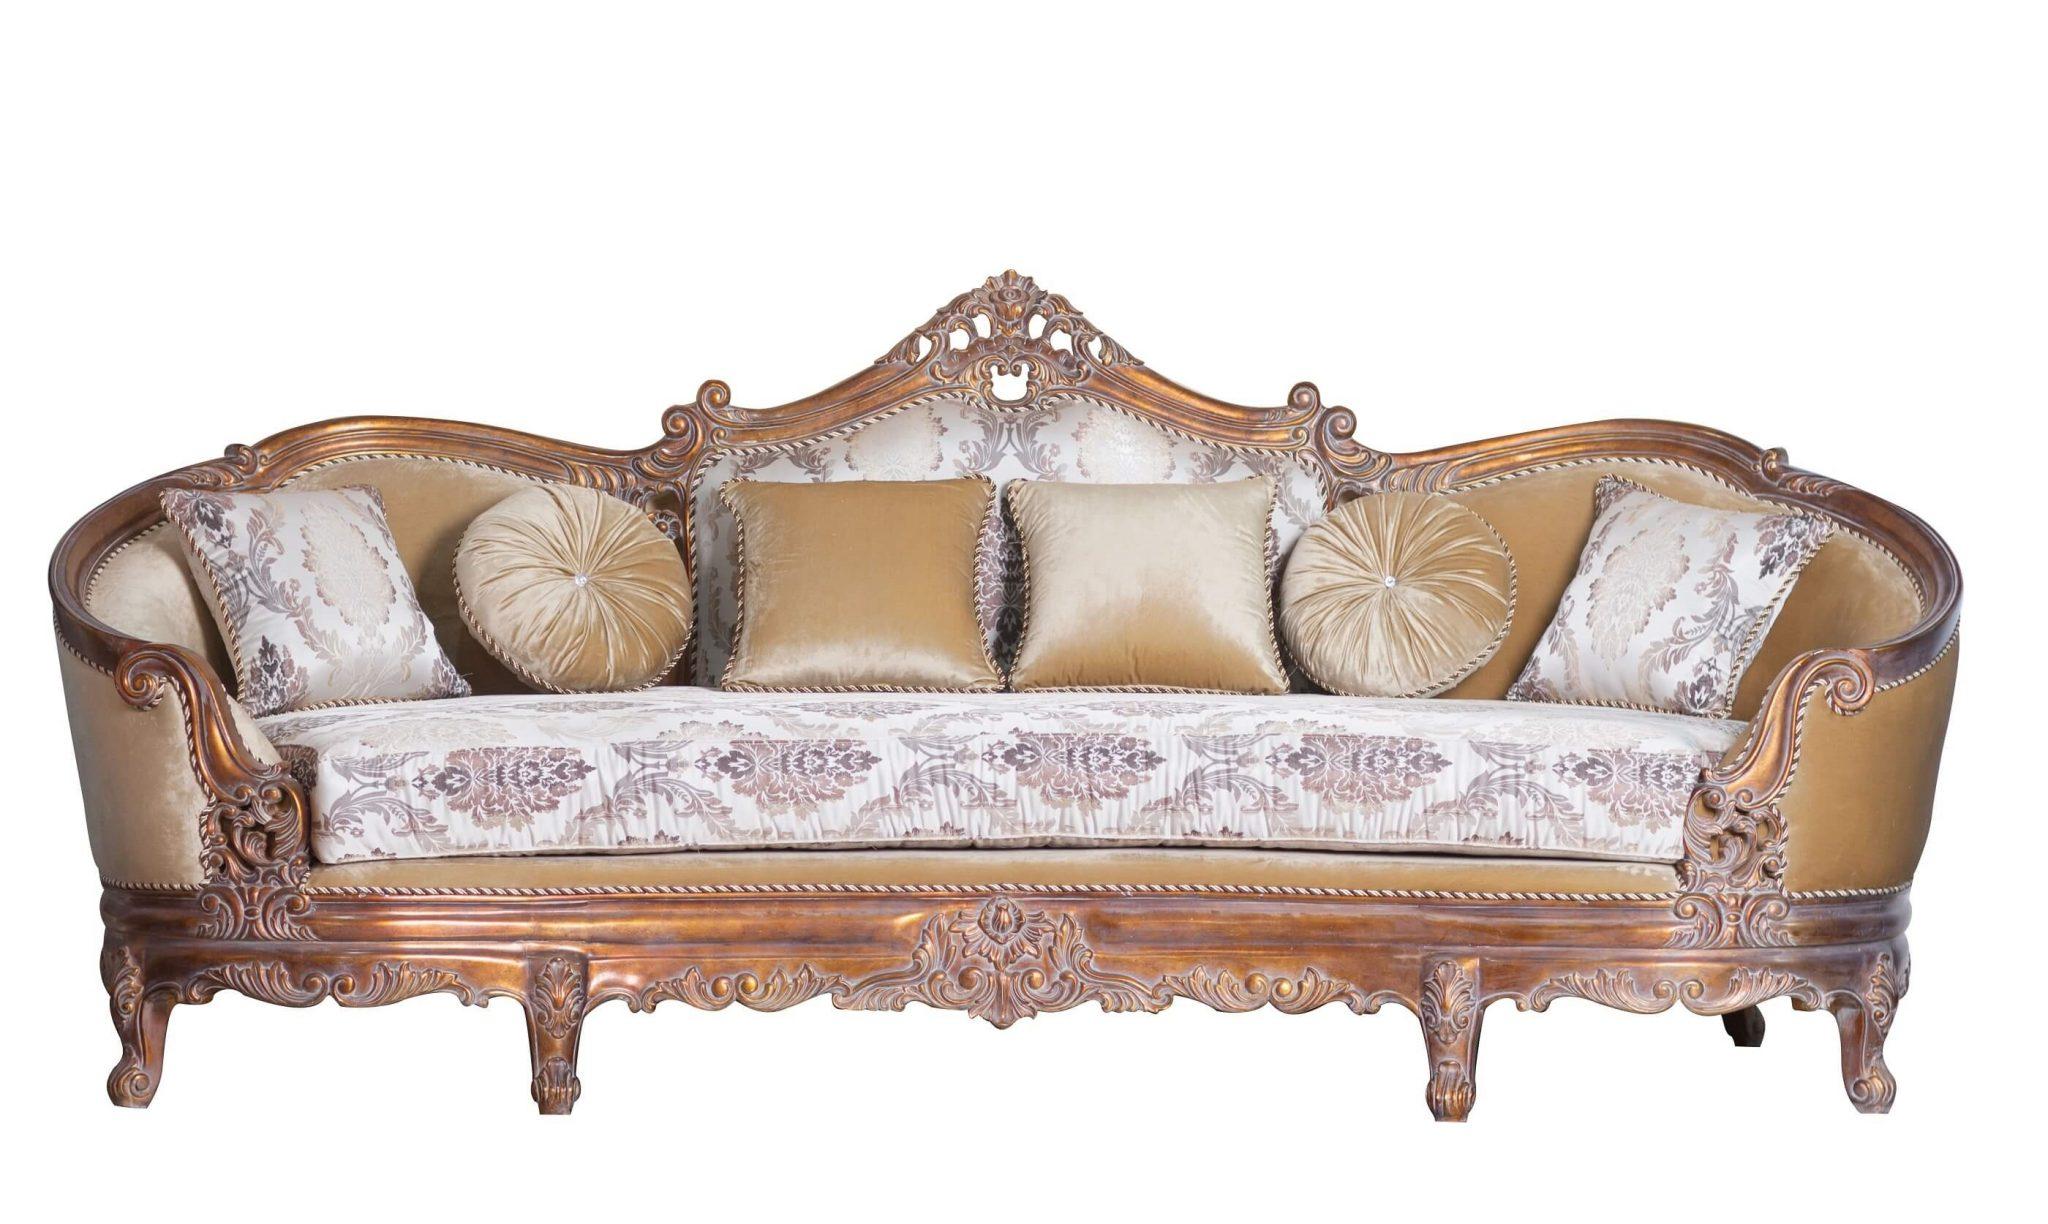 https://nyfurnitureoutlets.com/products/luxury-antique-dark-cooper-wood-trim-victorian-sofa-set-3-european-furniture/1x1/216158-2-410477045501.jpg